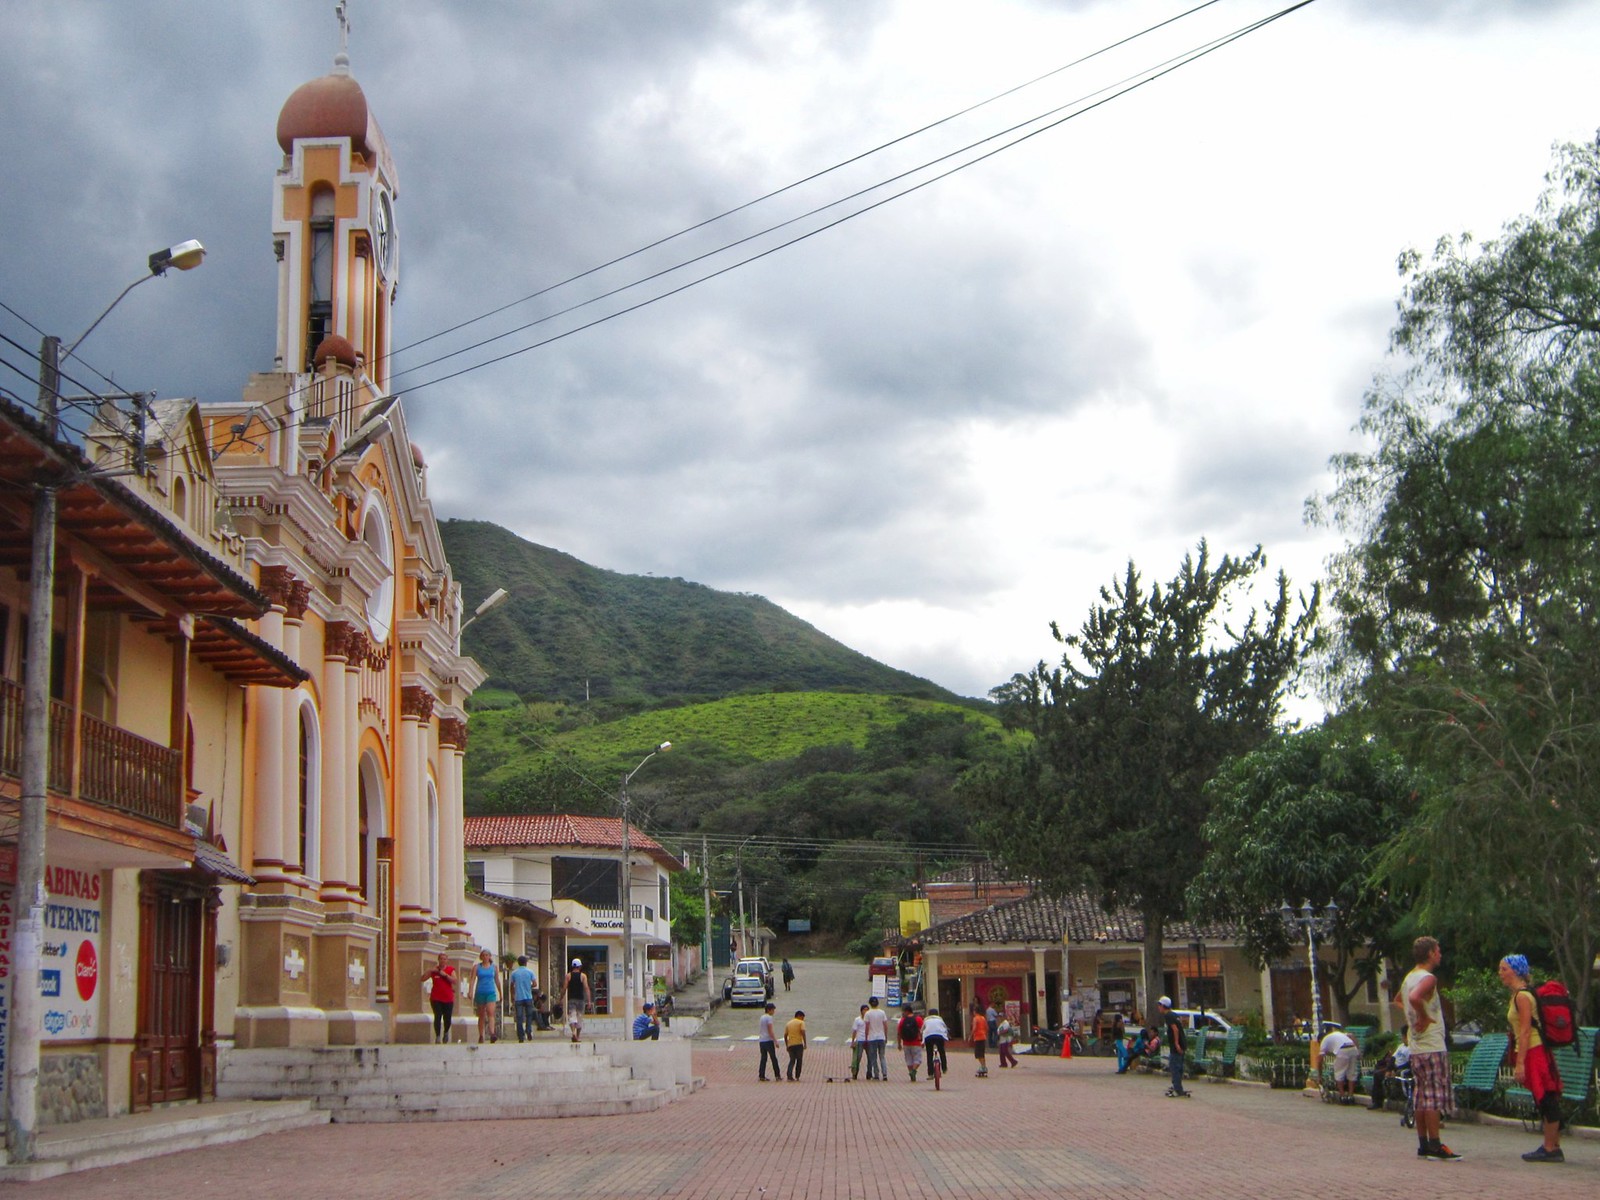 The main plaza and yellow painted church in Vilcabamba, Ecuador